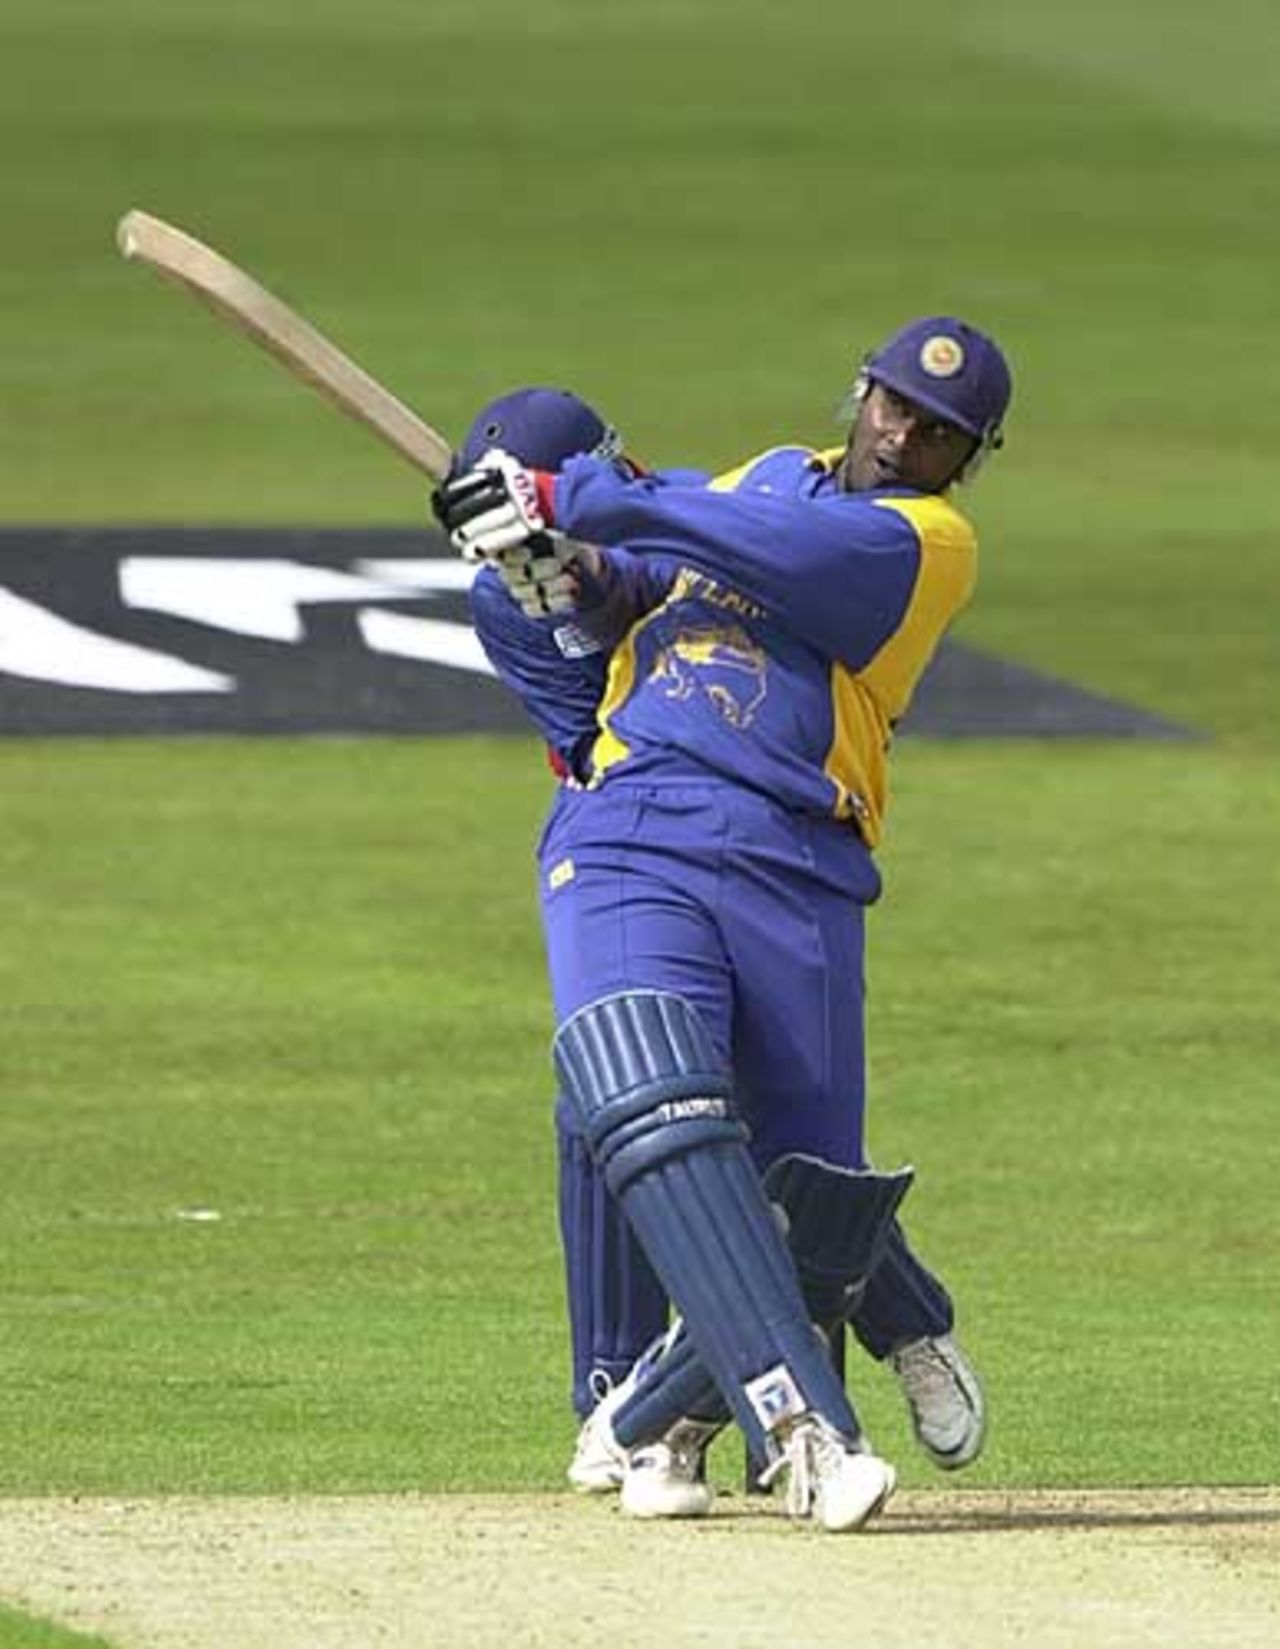 Gunawardene hits out in his innings of 20, England v Sri Lanka at Leeds, July 2002